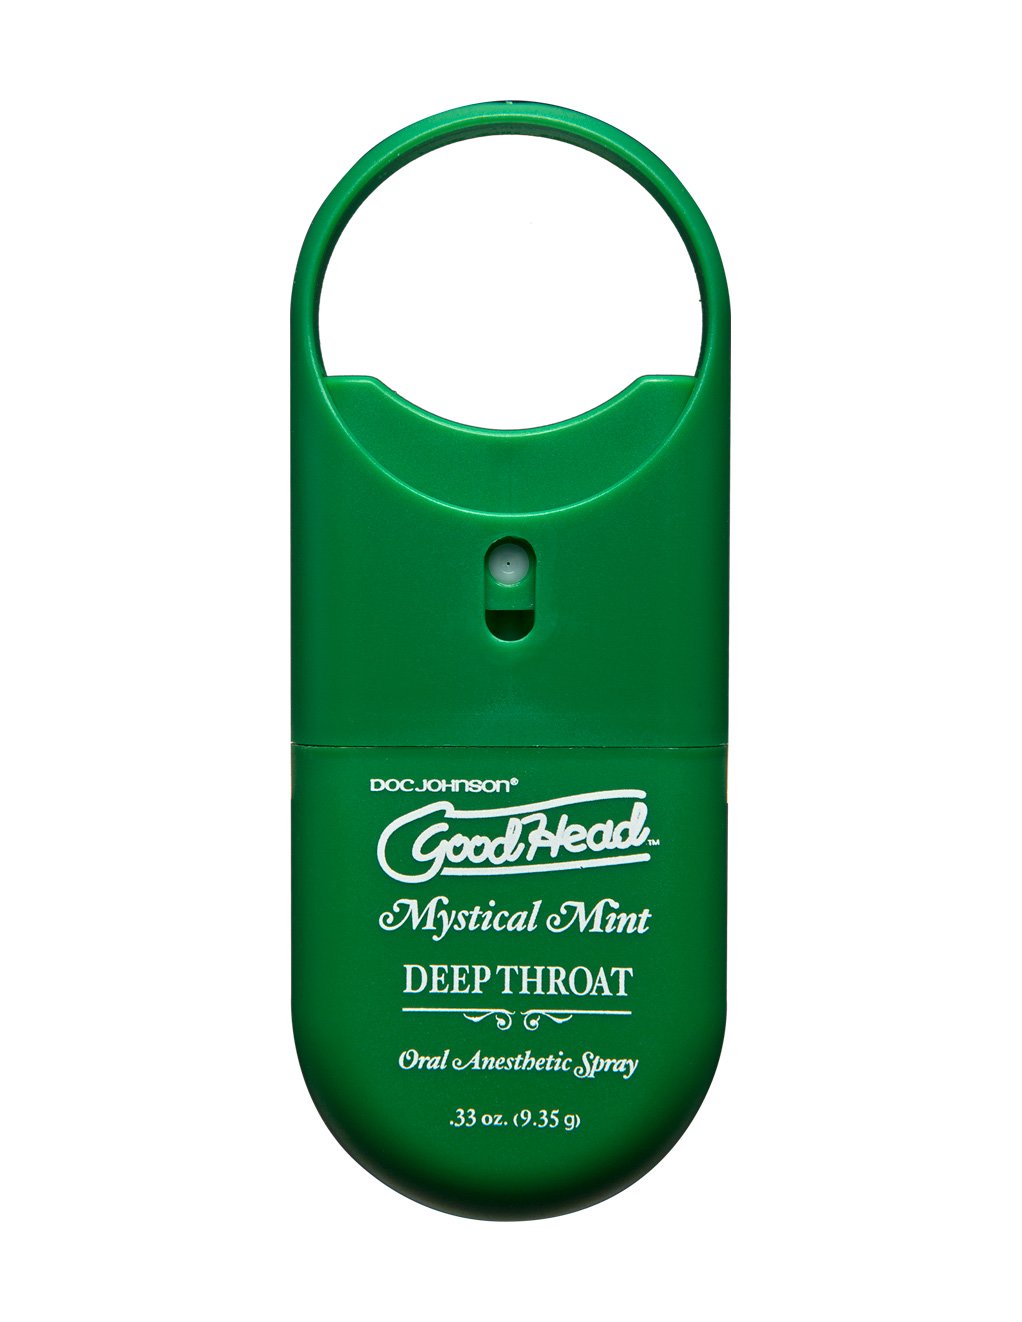 GoodHead Deep Throat To Go Desensitizing Spray- Mint